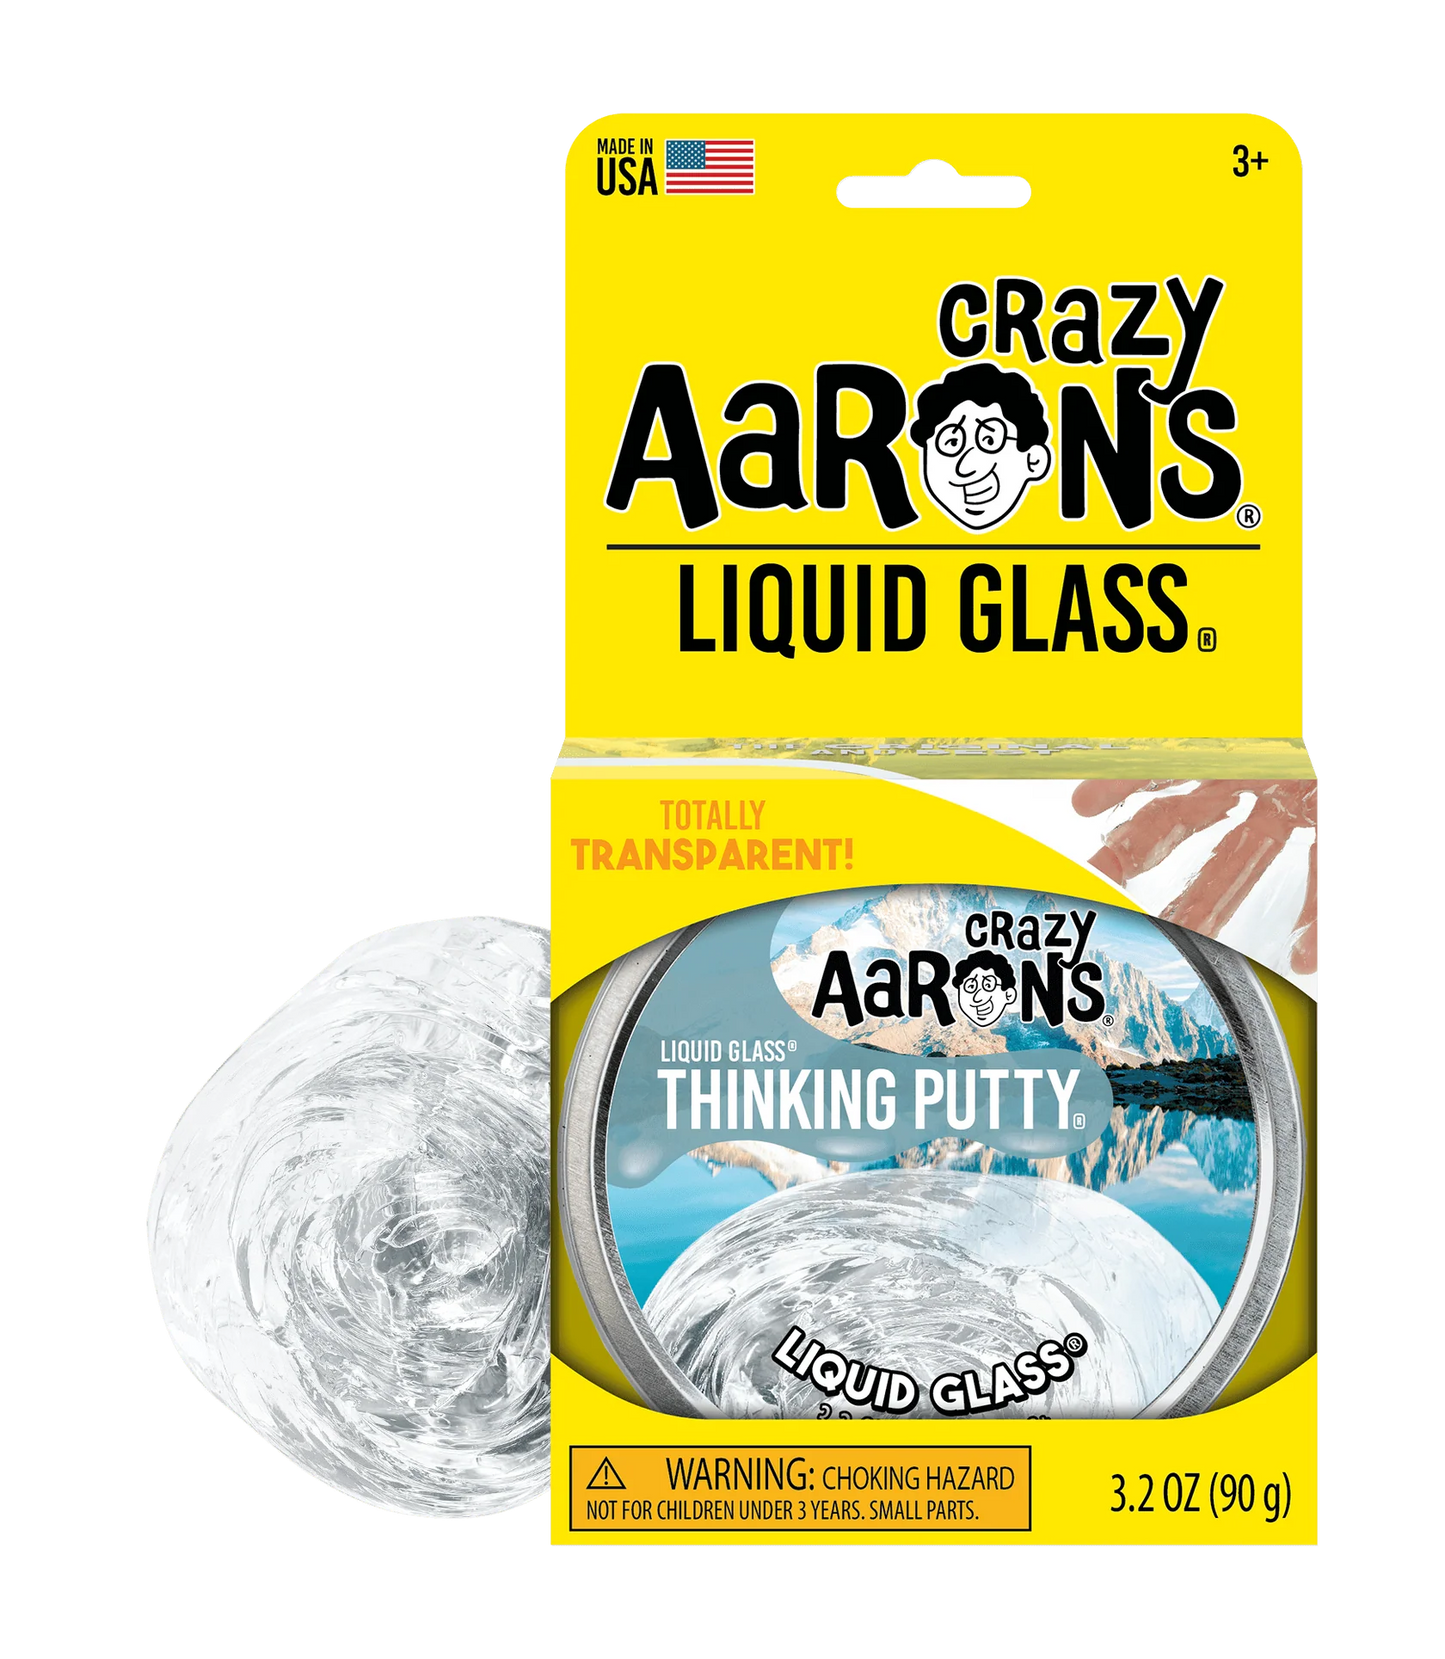 CRAZY AARON'S THINKING PUTTY LIQUID GLASS